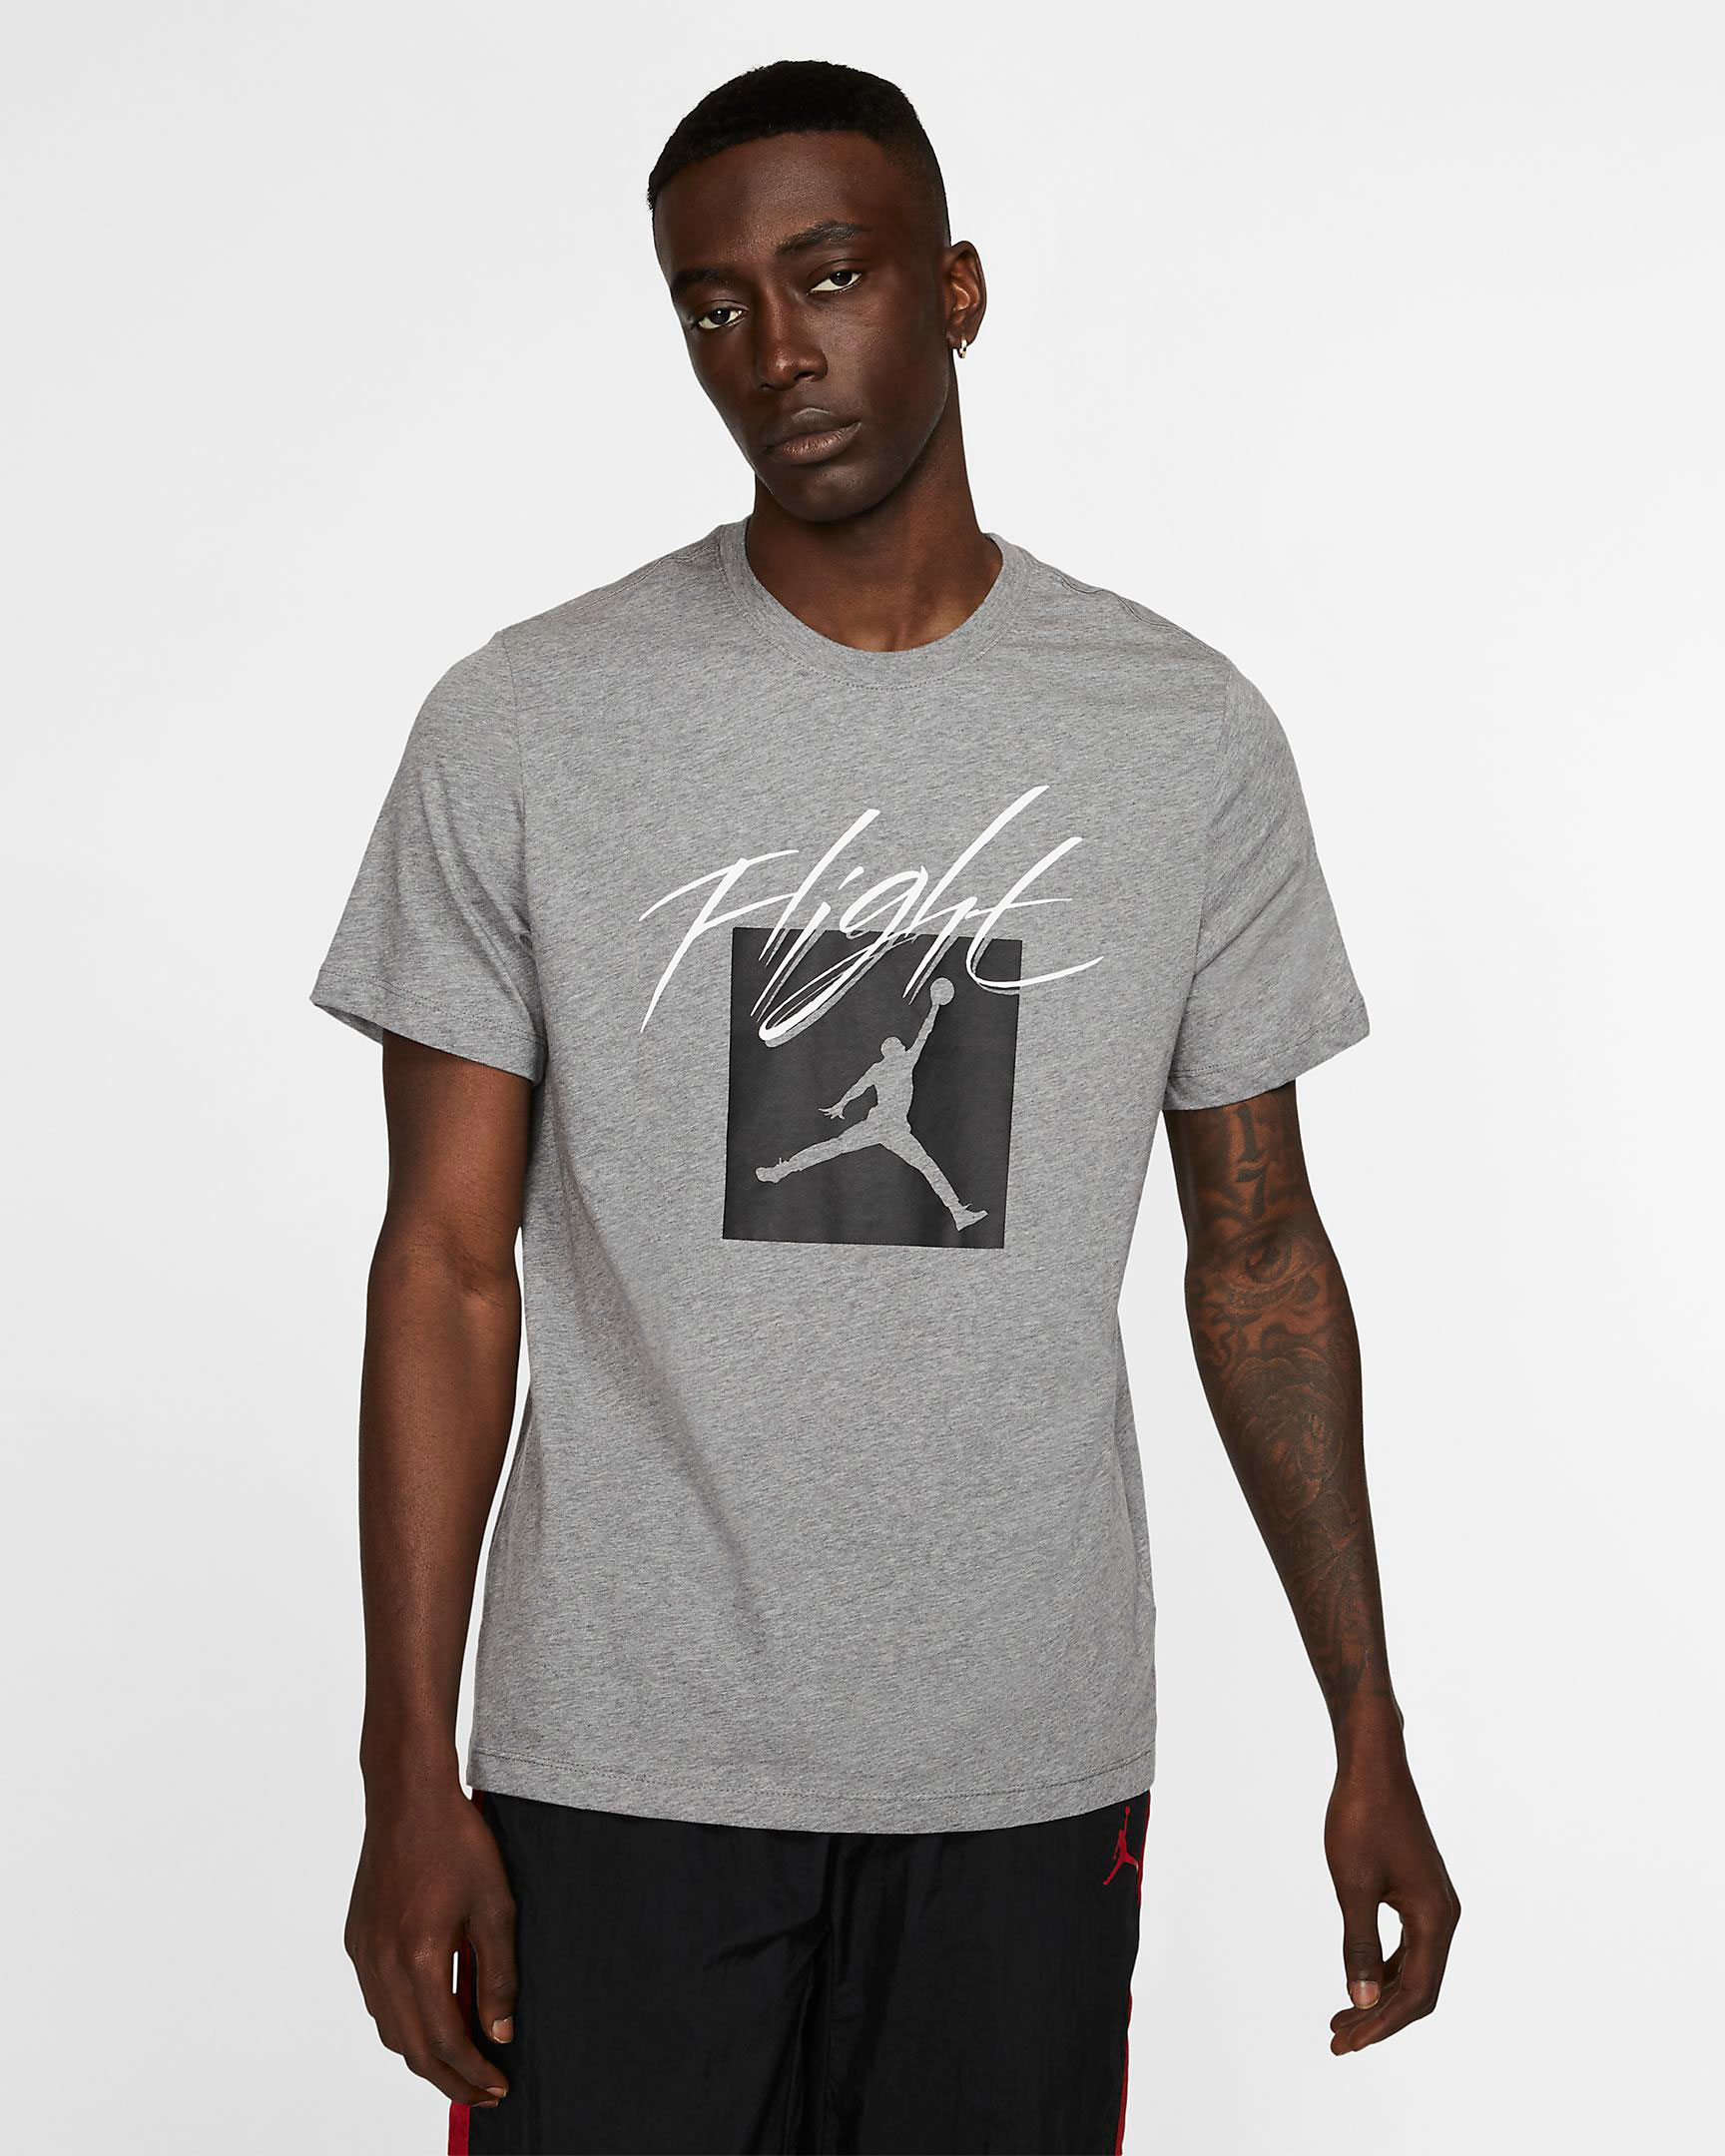 Air Jordan 3 Tinker Black Cement Shirts | SneakerFits.com